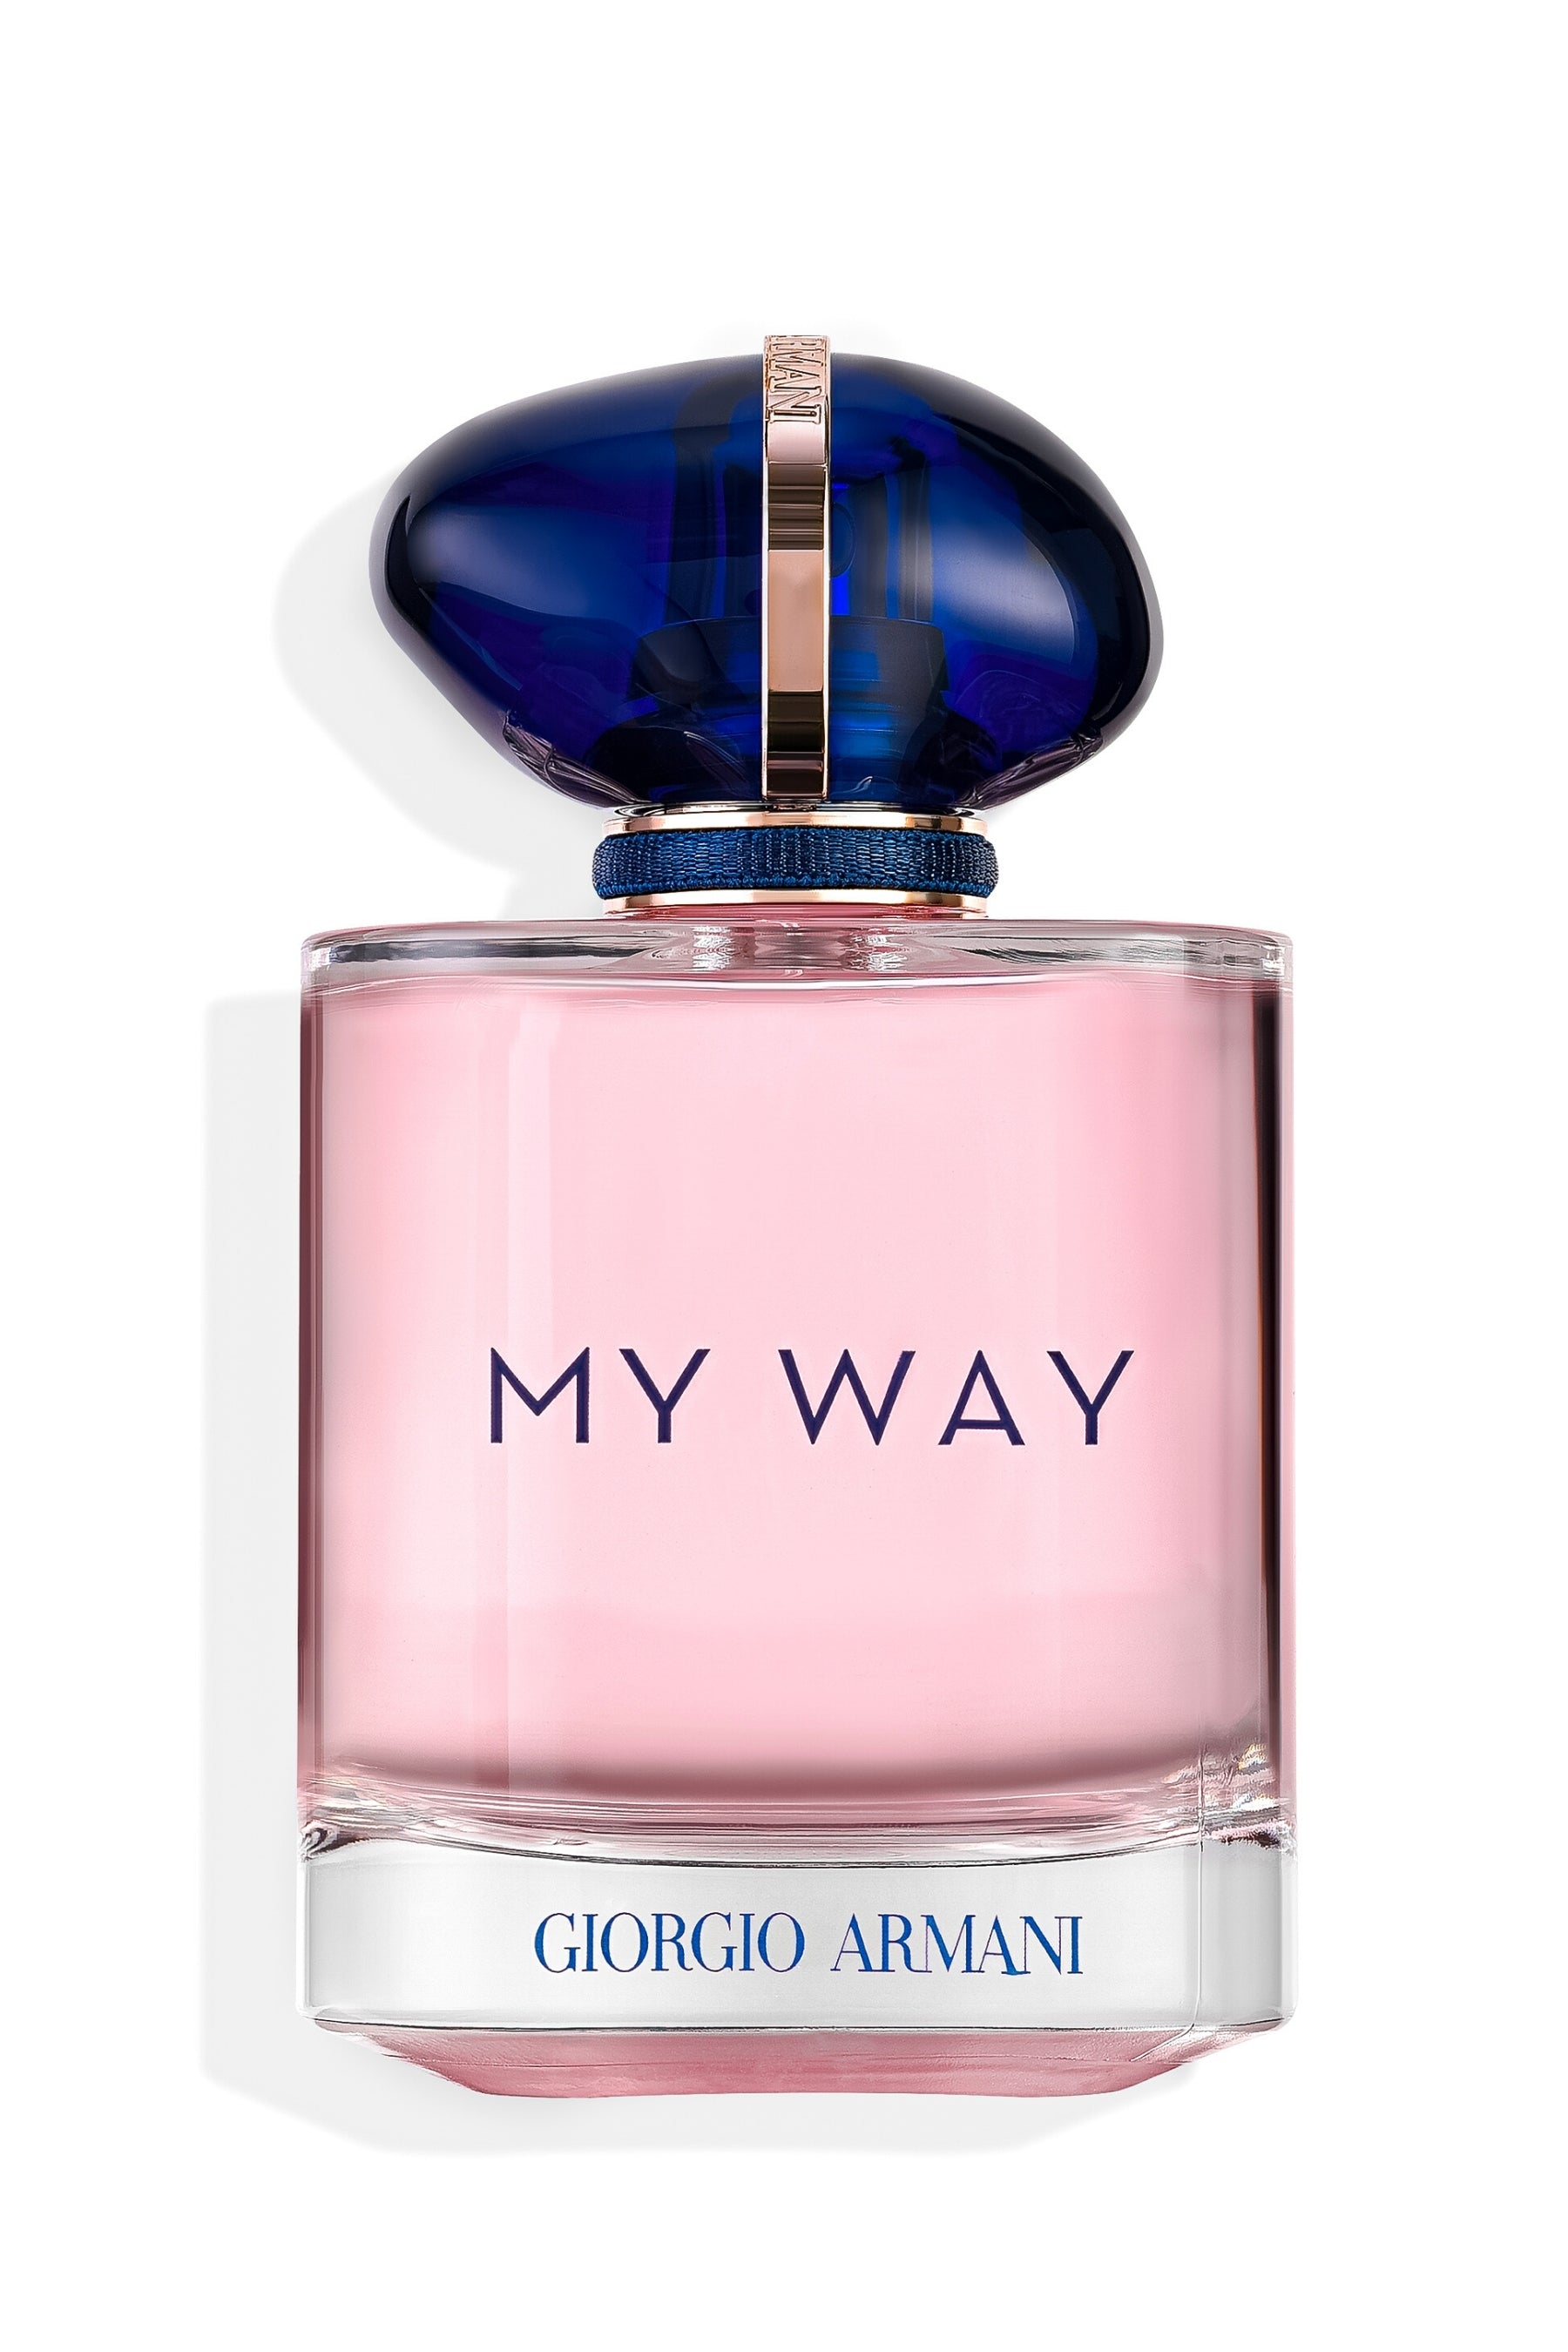 Armani My Way Parfum - 3.0 oz